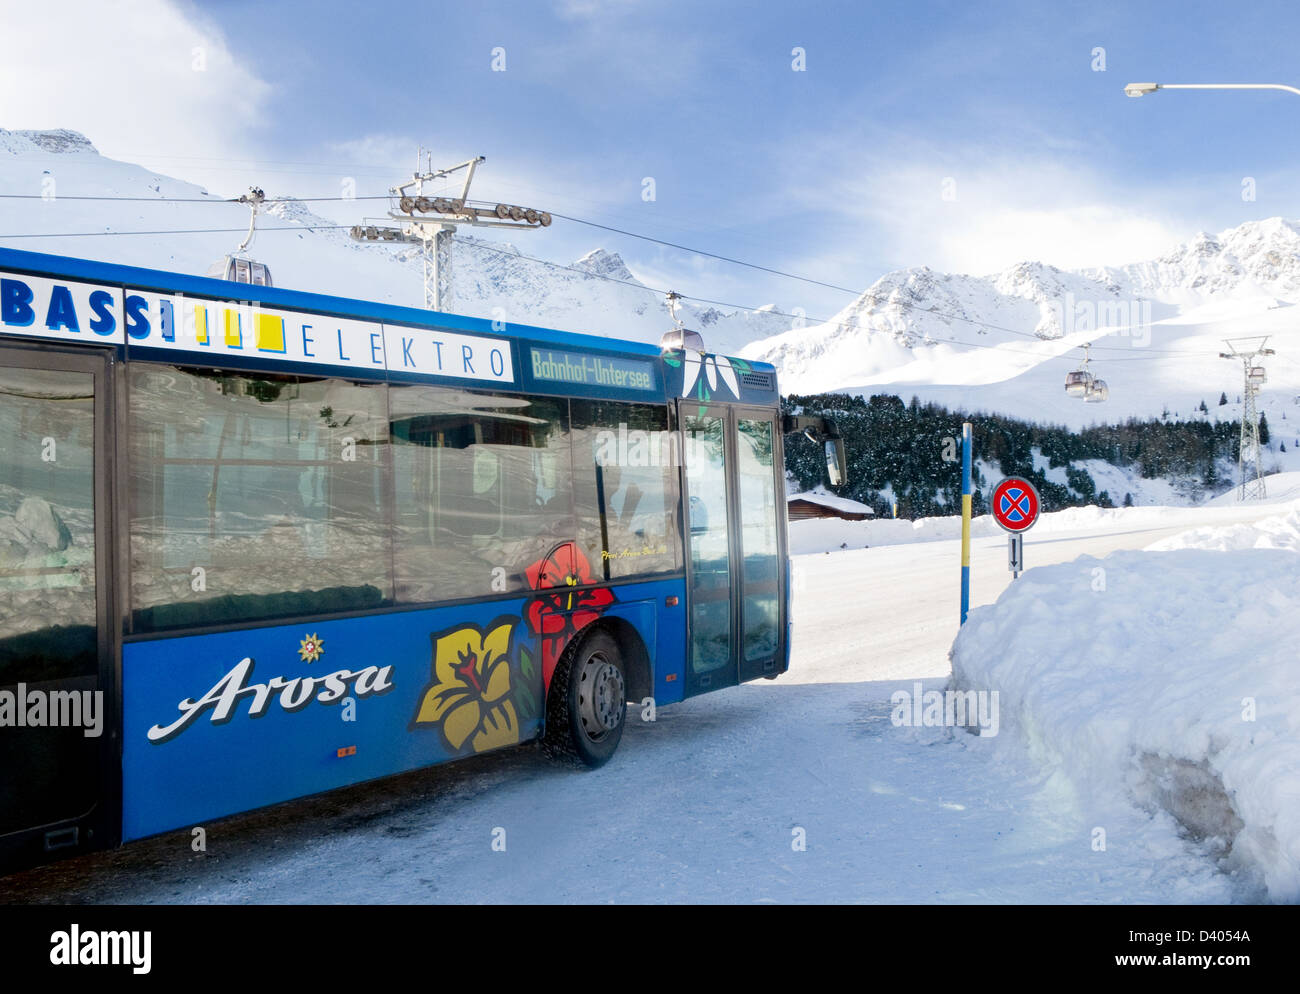 L'Arosa ski resort ski bus dei trasporti, Arosa, Svizzera Europa Foto Stock